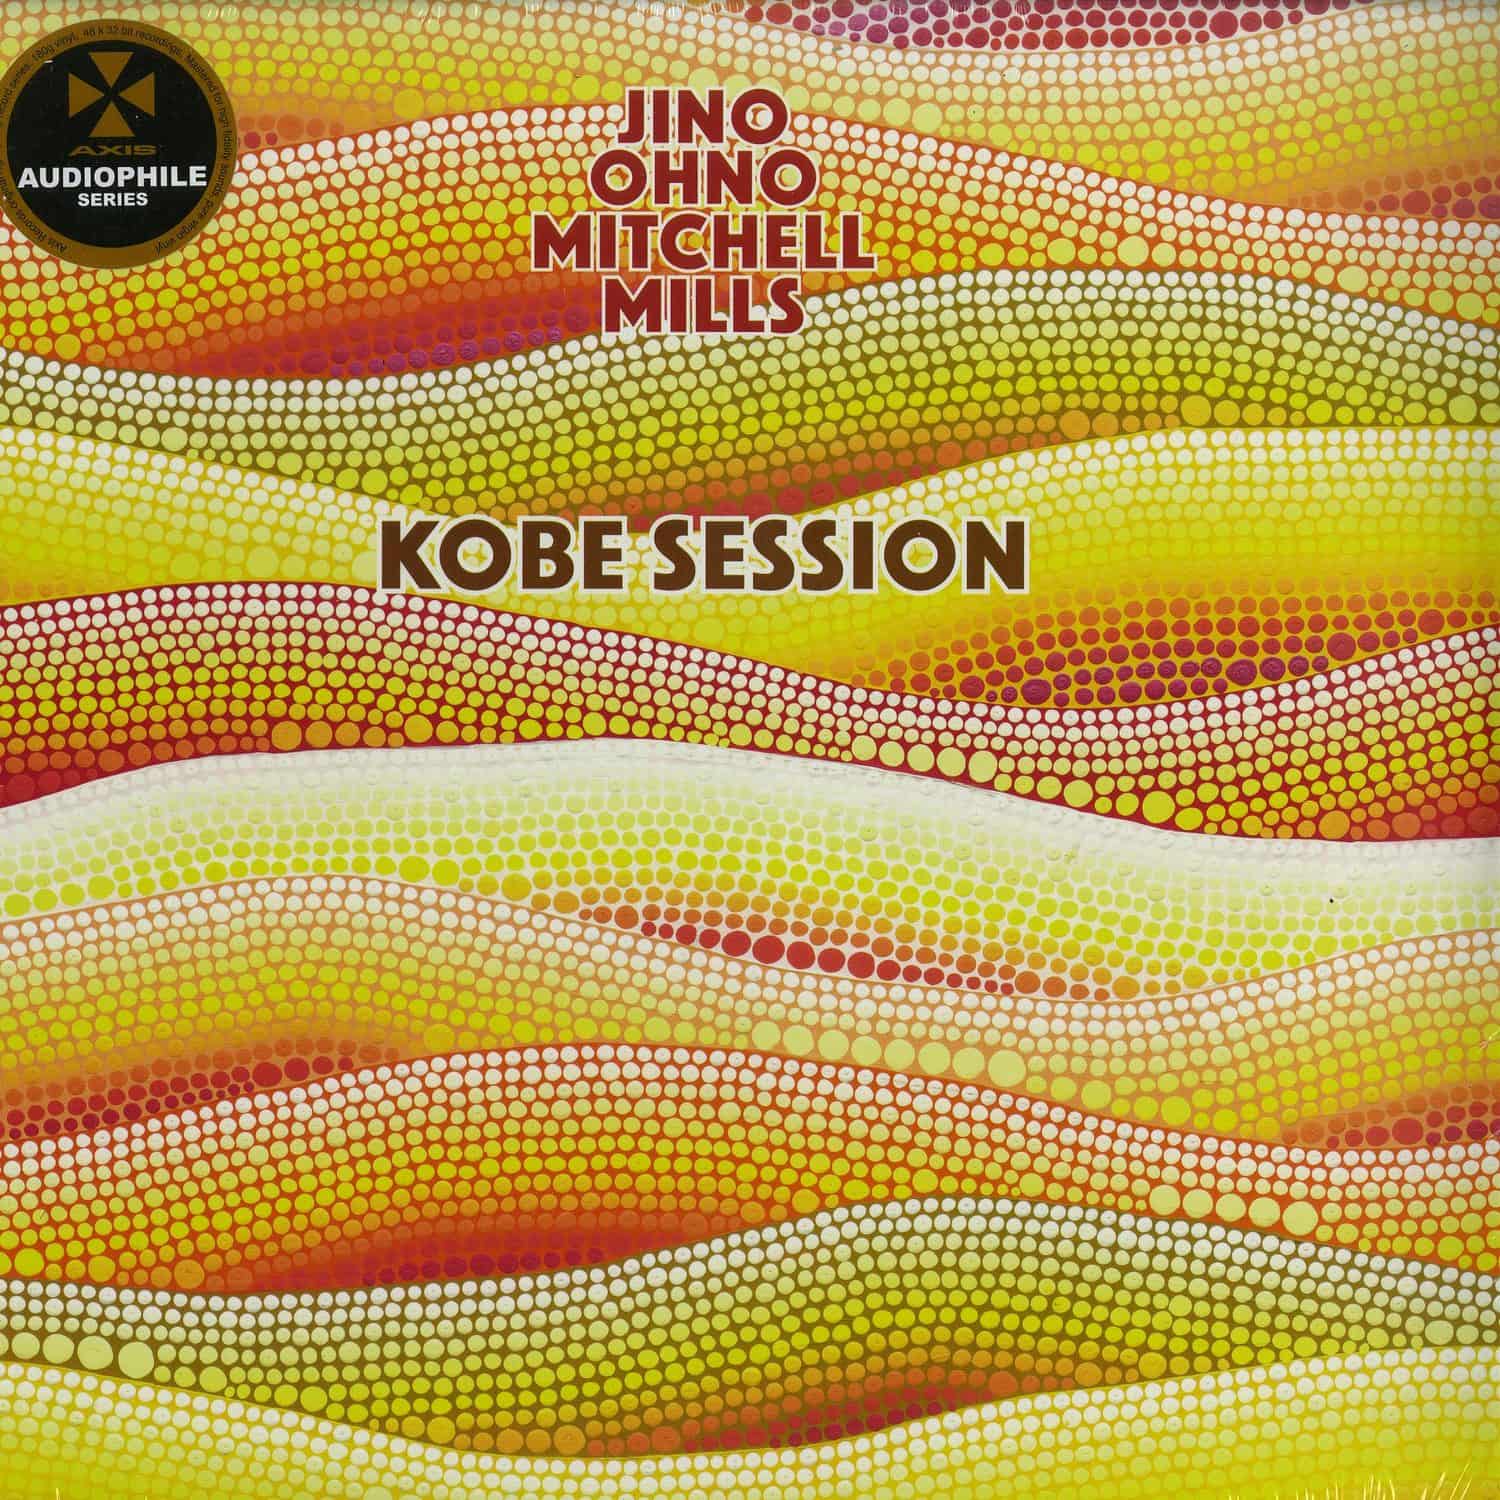 Jino Ohno Mitchell Mills  - KOBE SESSION